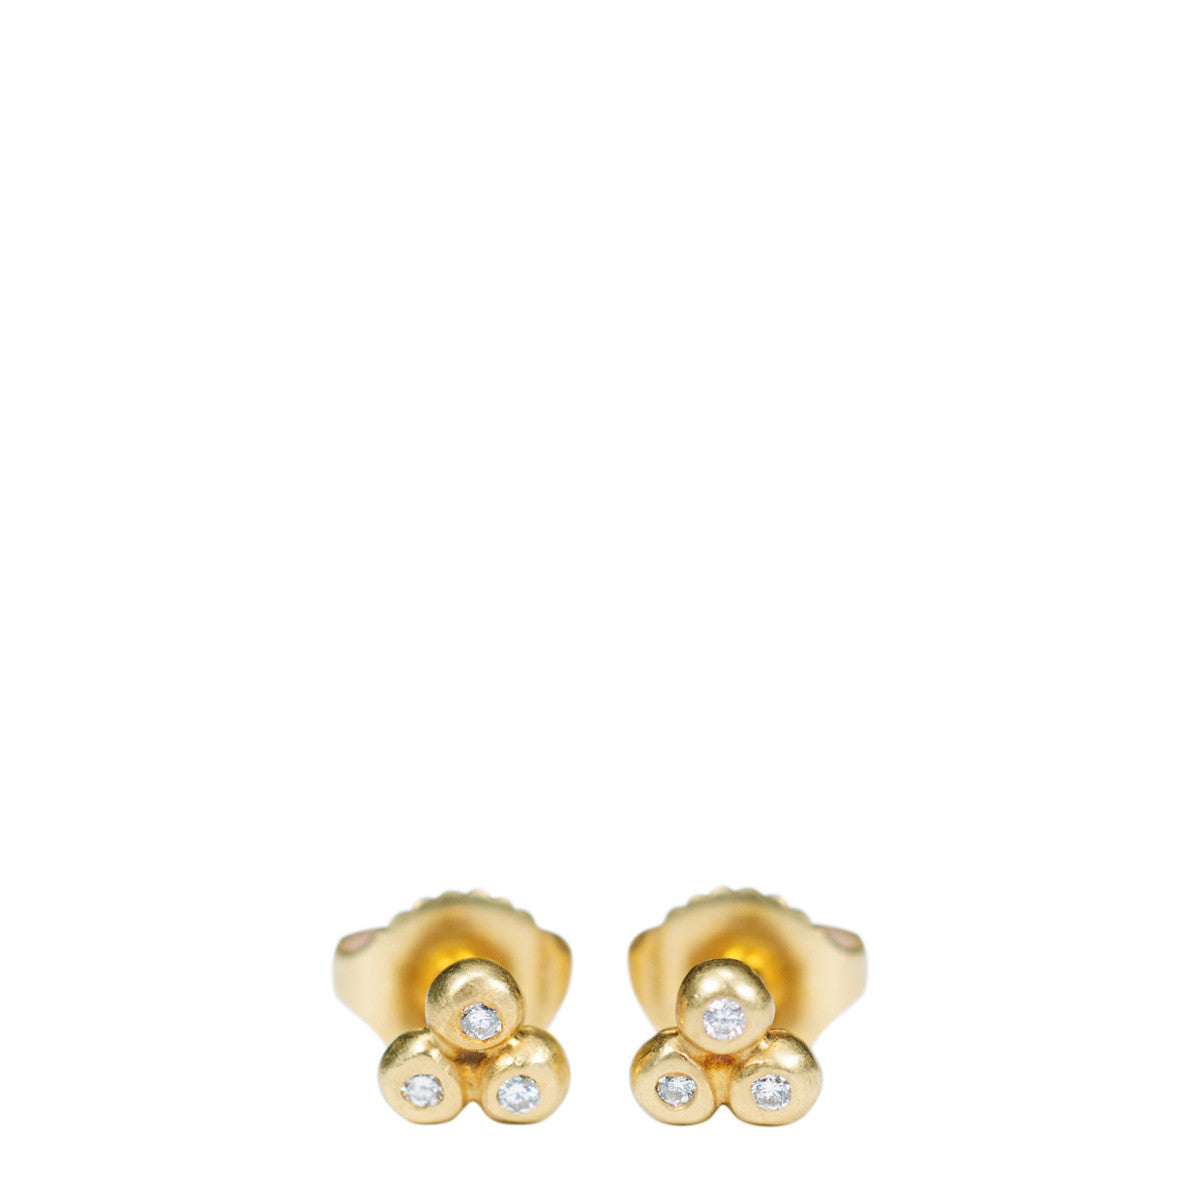 18K Gold Tiny 3 Ball Stud Earrings with Diamonds